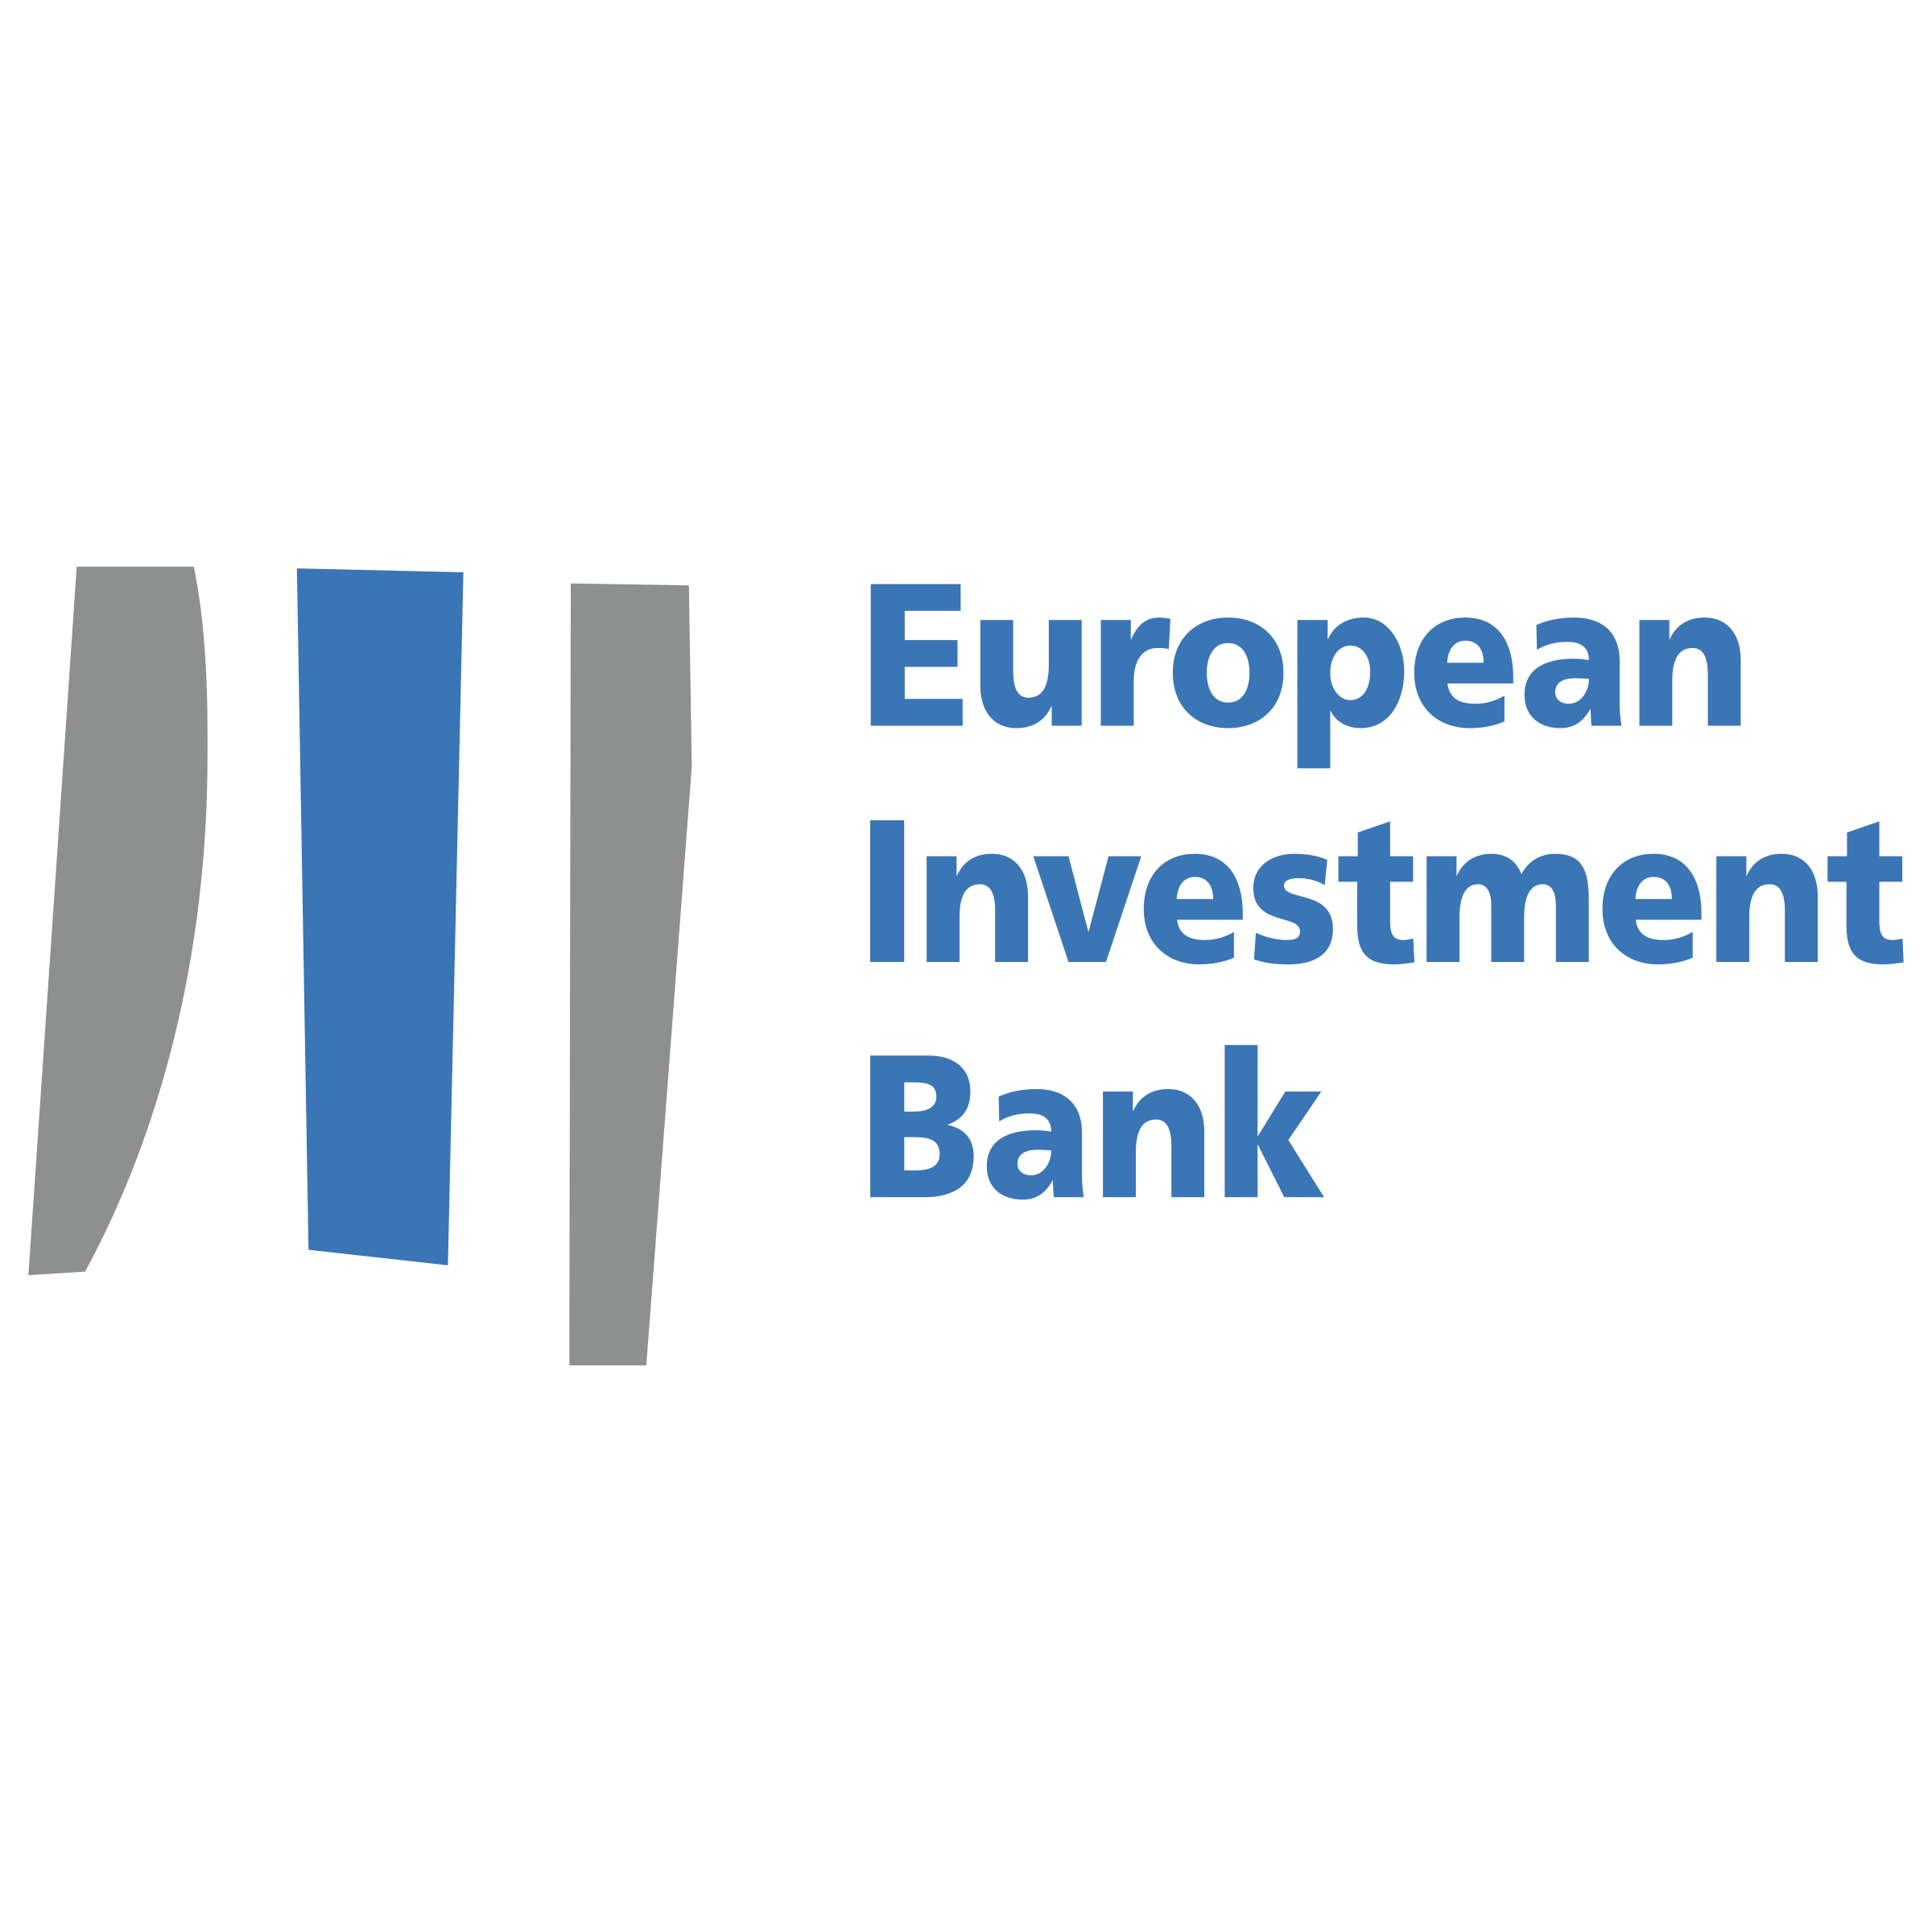 european-investment-bank-logo-png-transparent.png